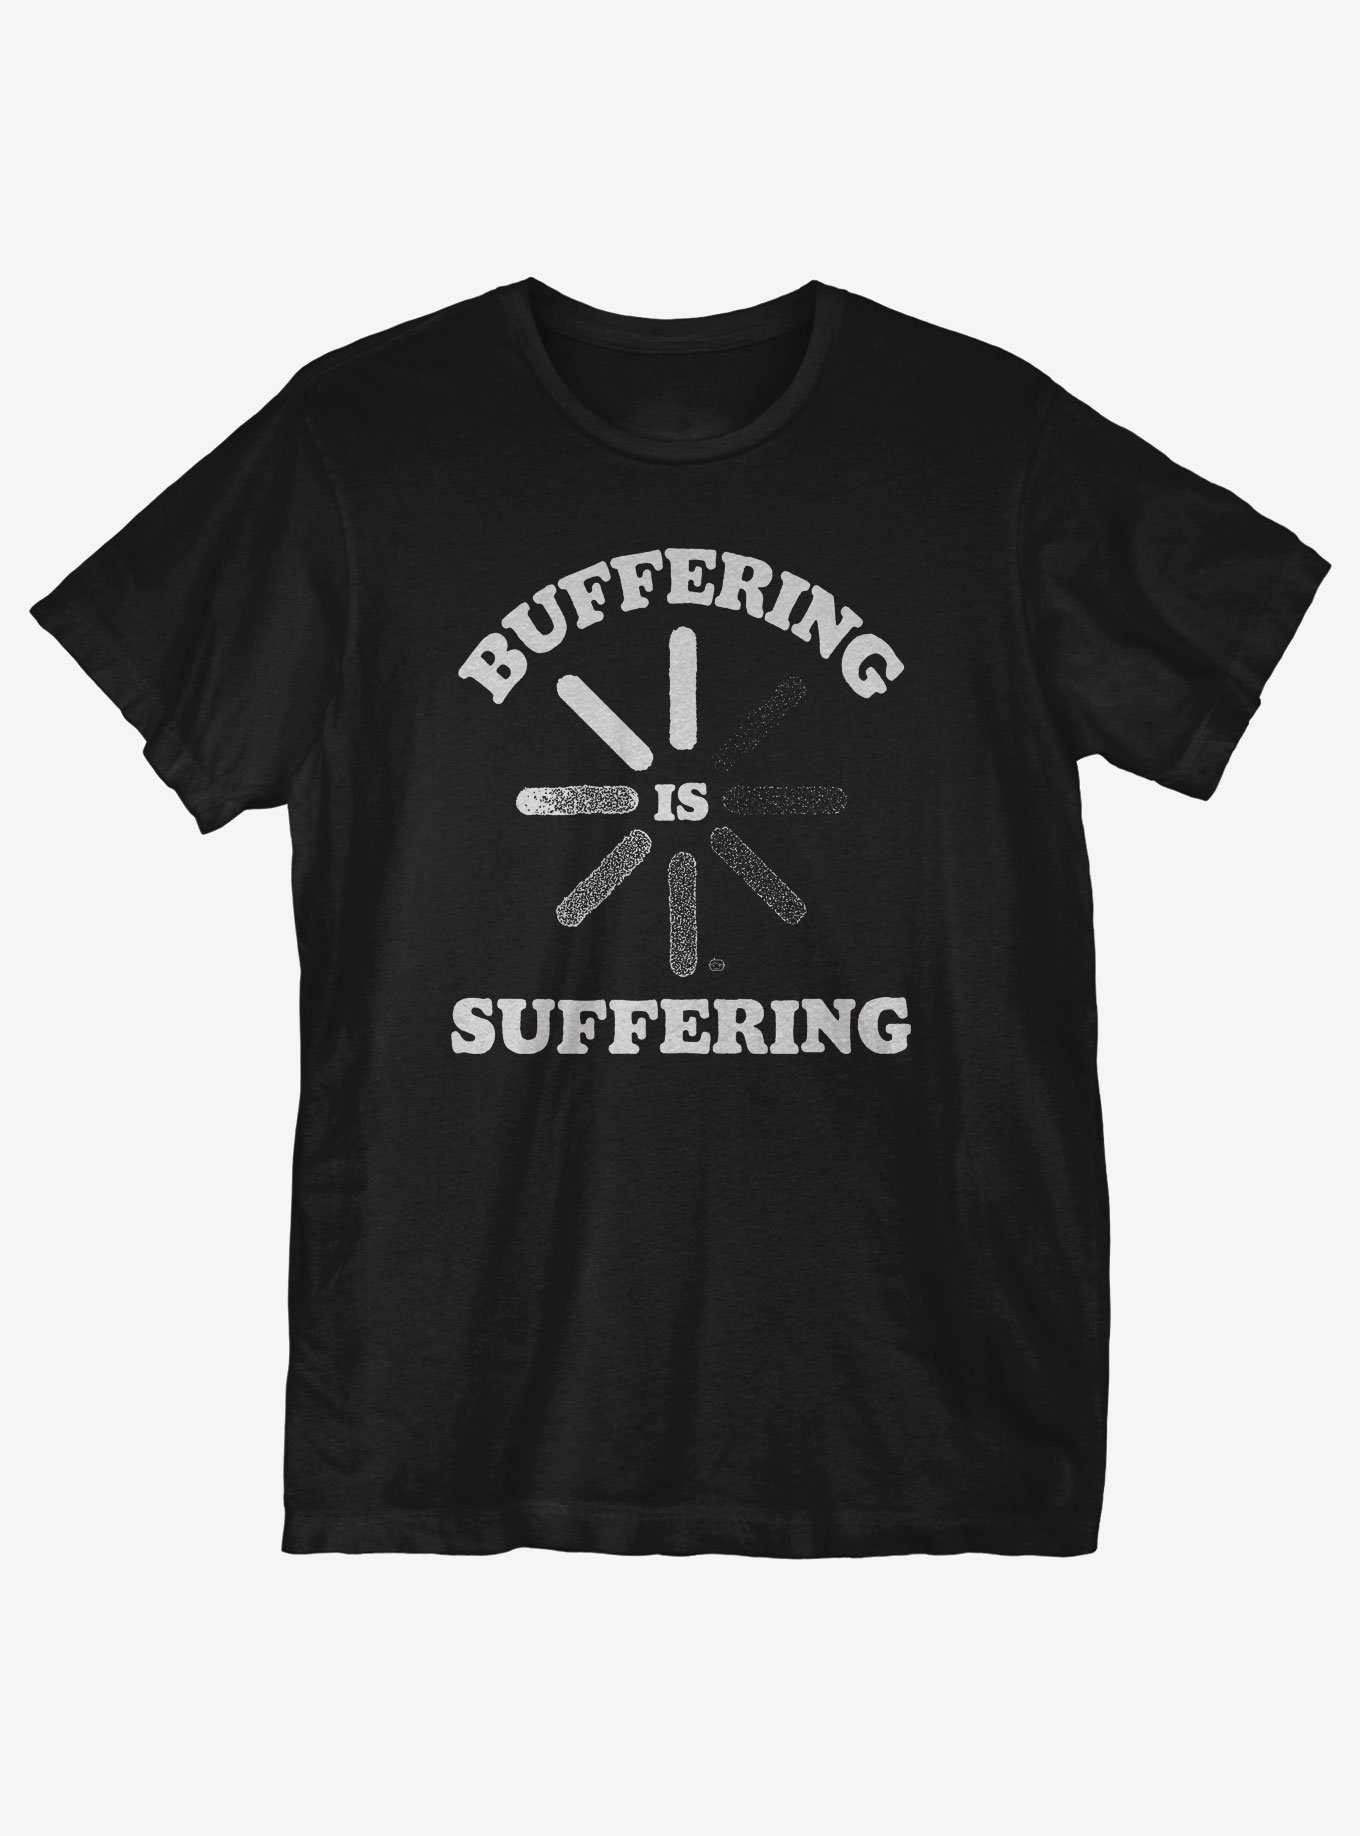 Buffering is Suffering T-Shirt, , hi-res